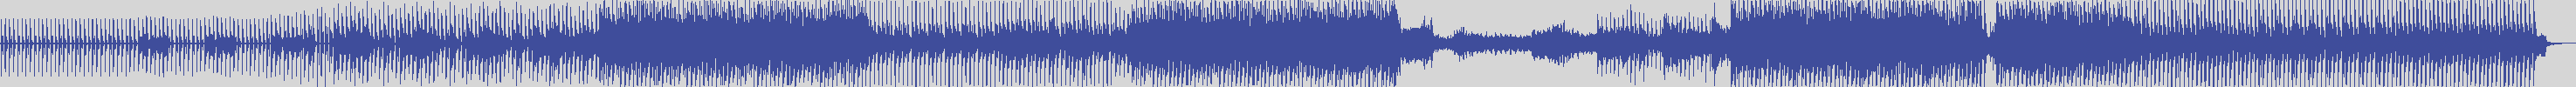 atomic_recordings [AR007] Megahertz - Aloha [Club Mix] audio wave form